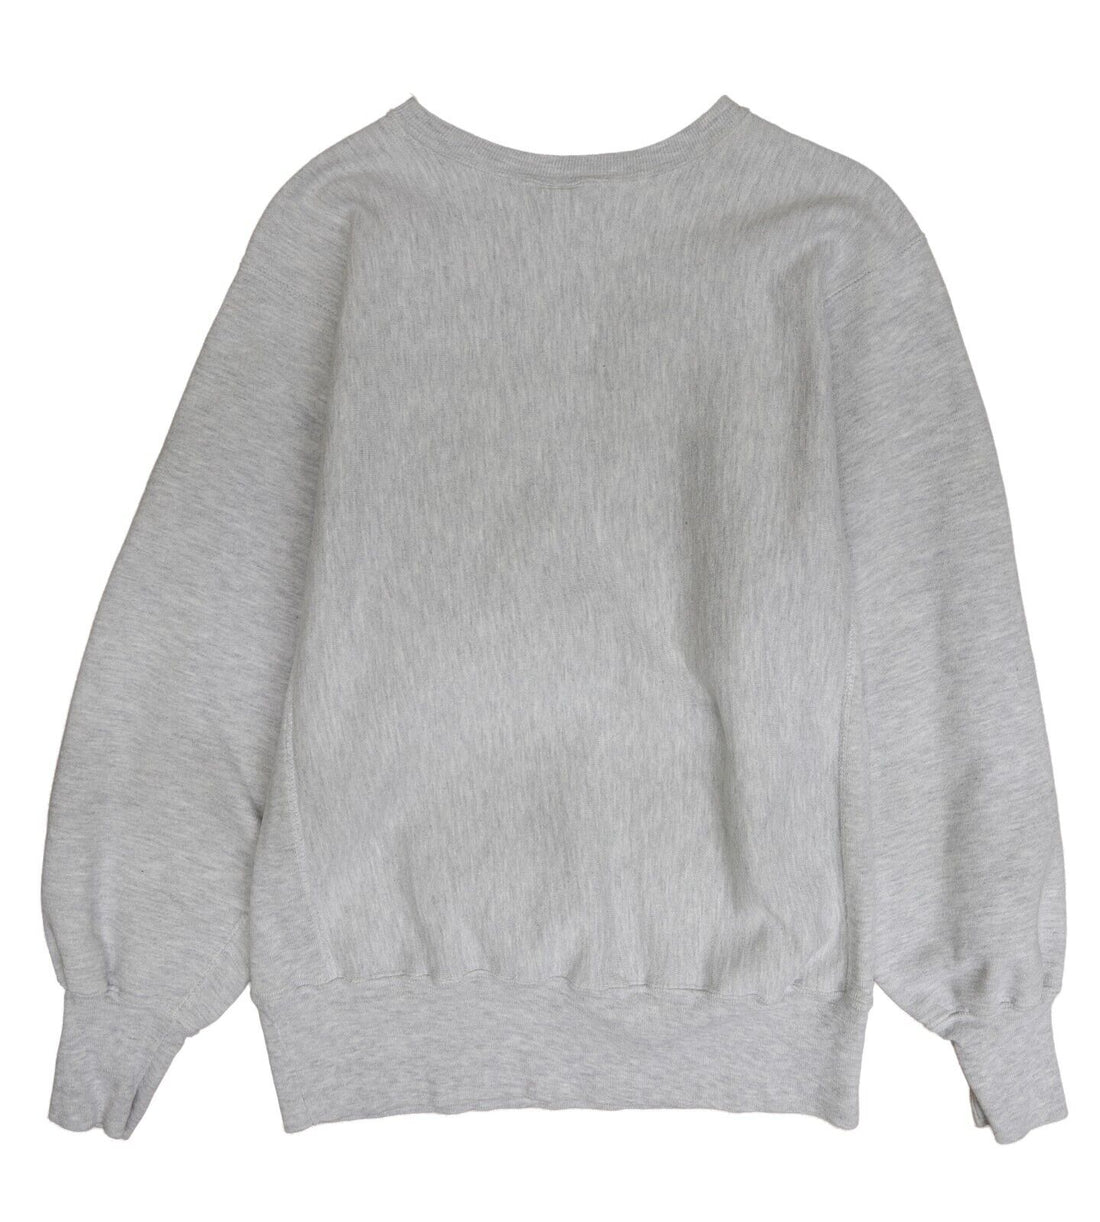 Vintage Boston University Champion Reverse Weave Sweatshirt Size Large Gray 90s